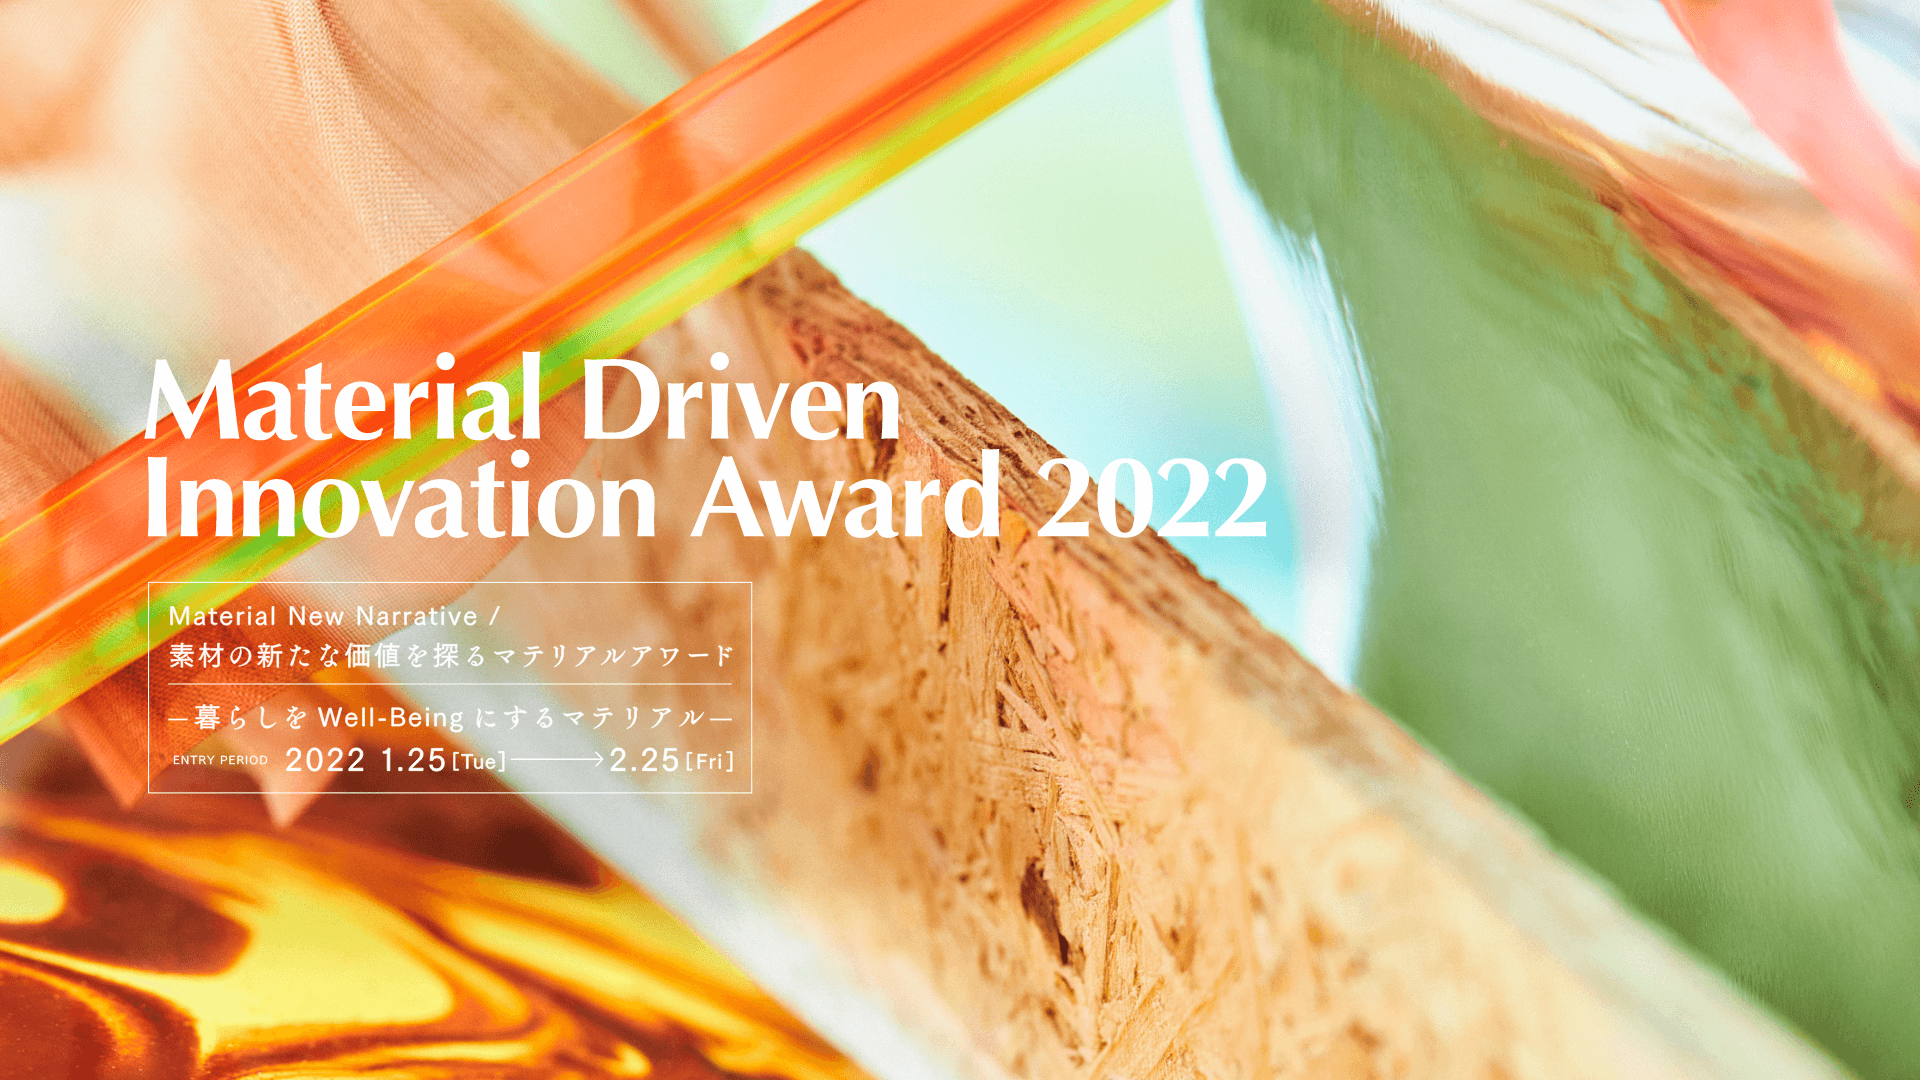 Material Driven Innovation Award 2022 を見る